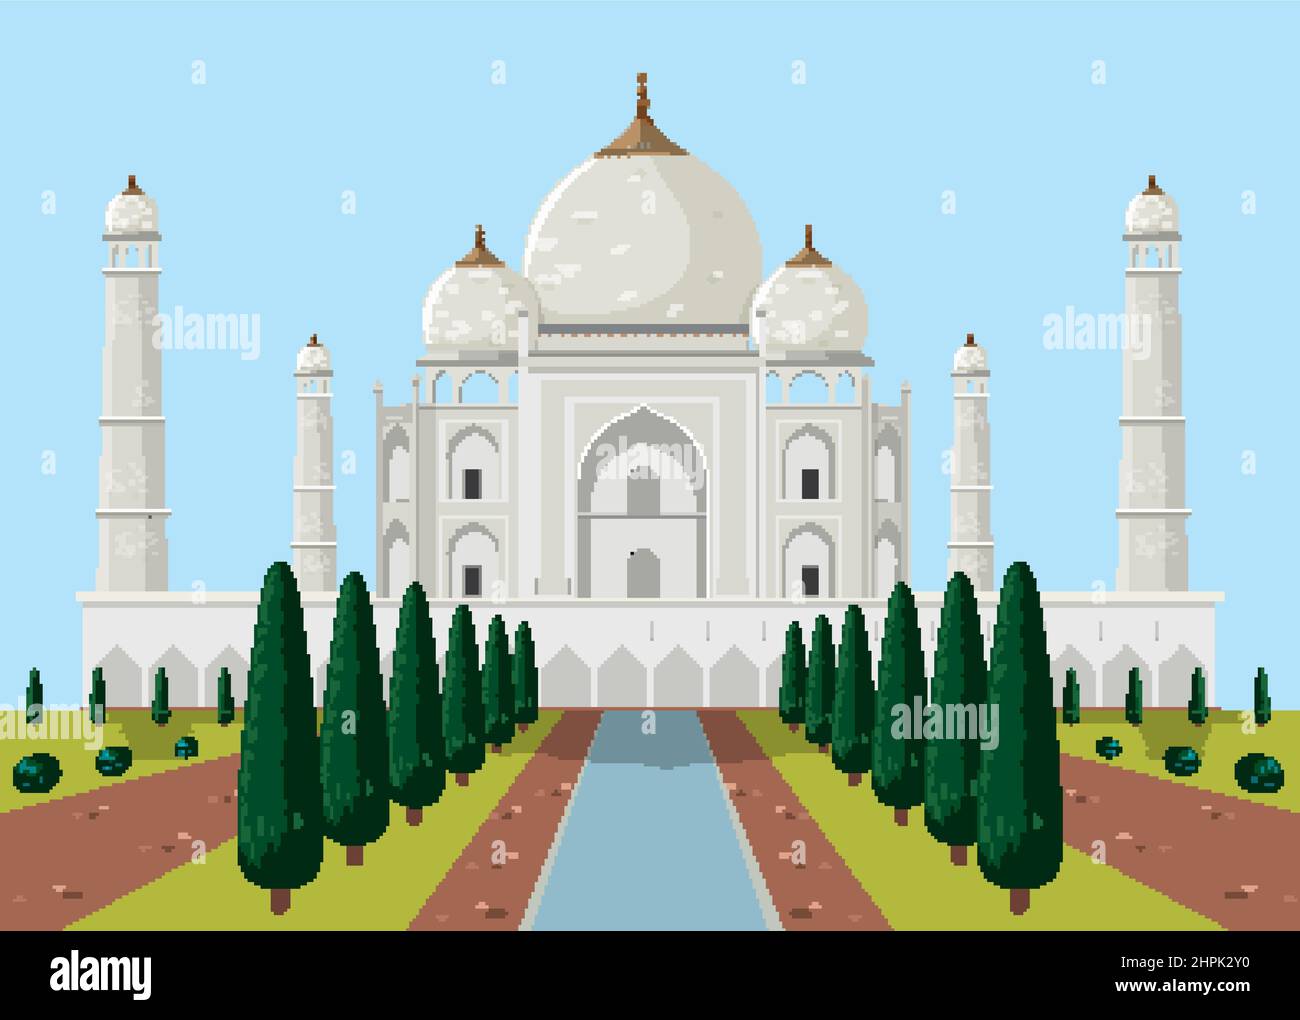 Taj mahal drawing Stock Vector Images - Alamy